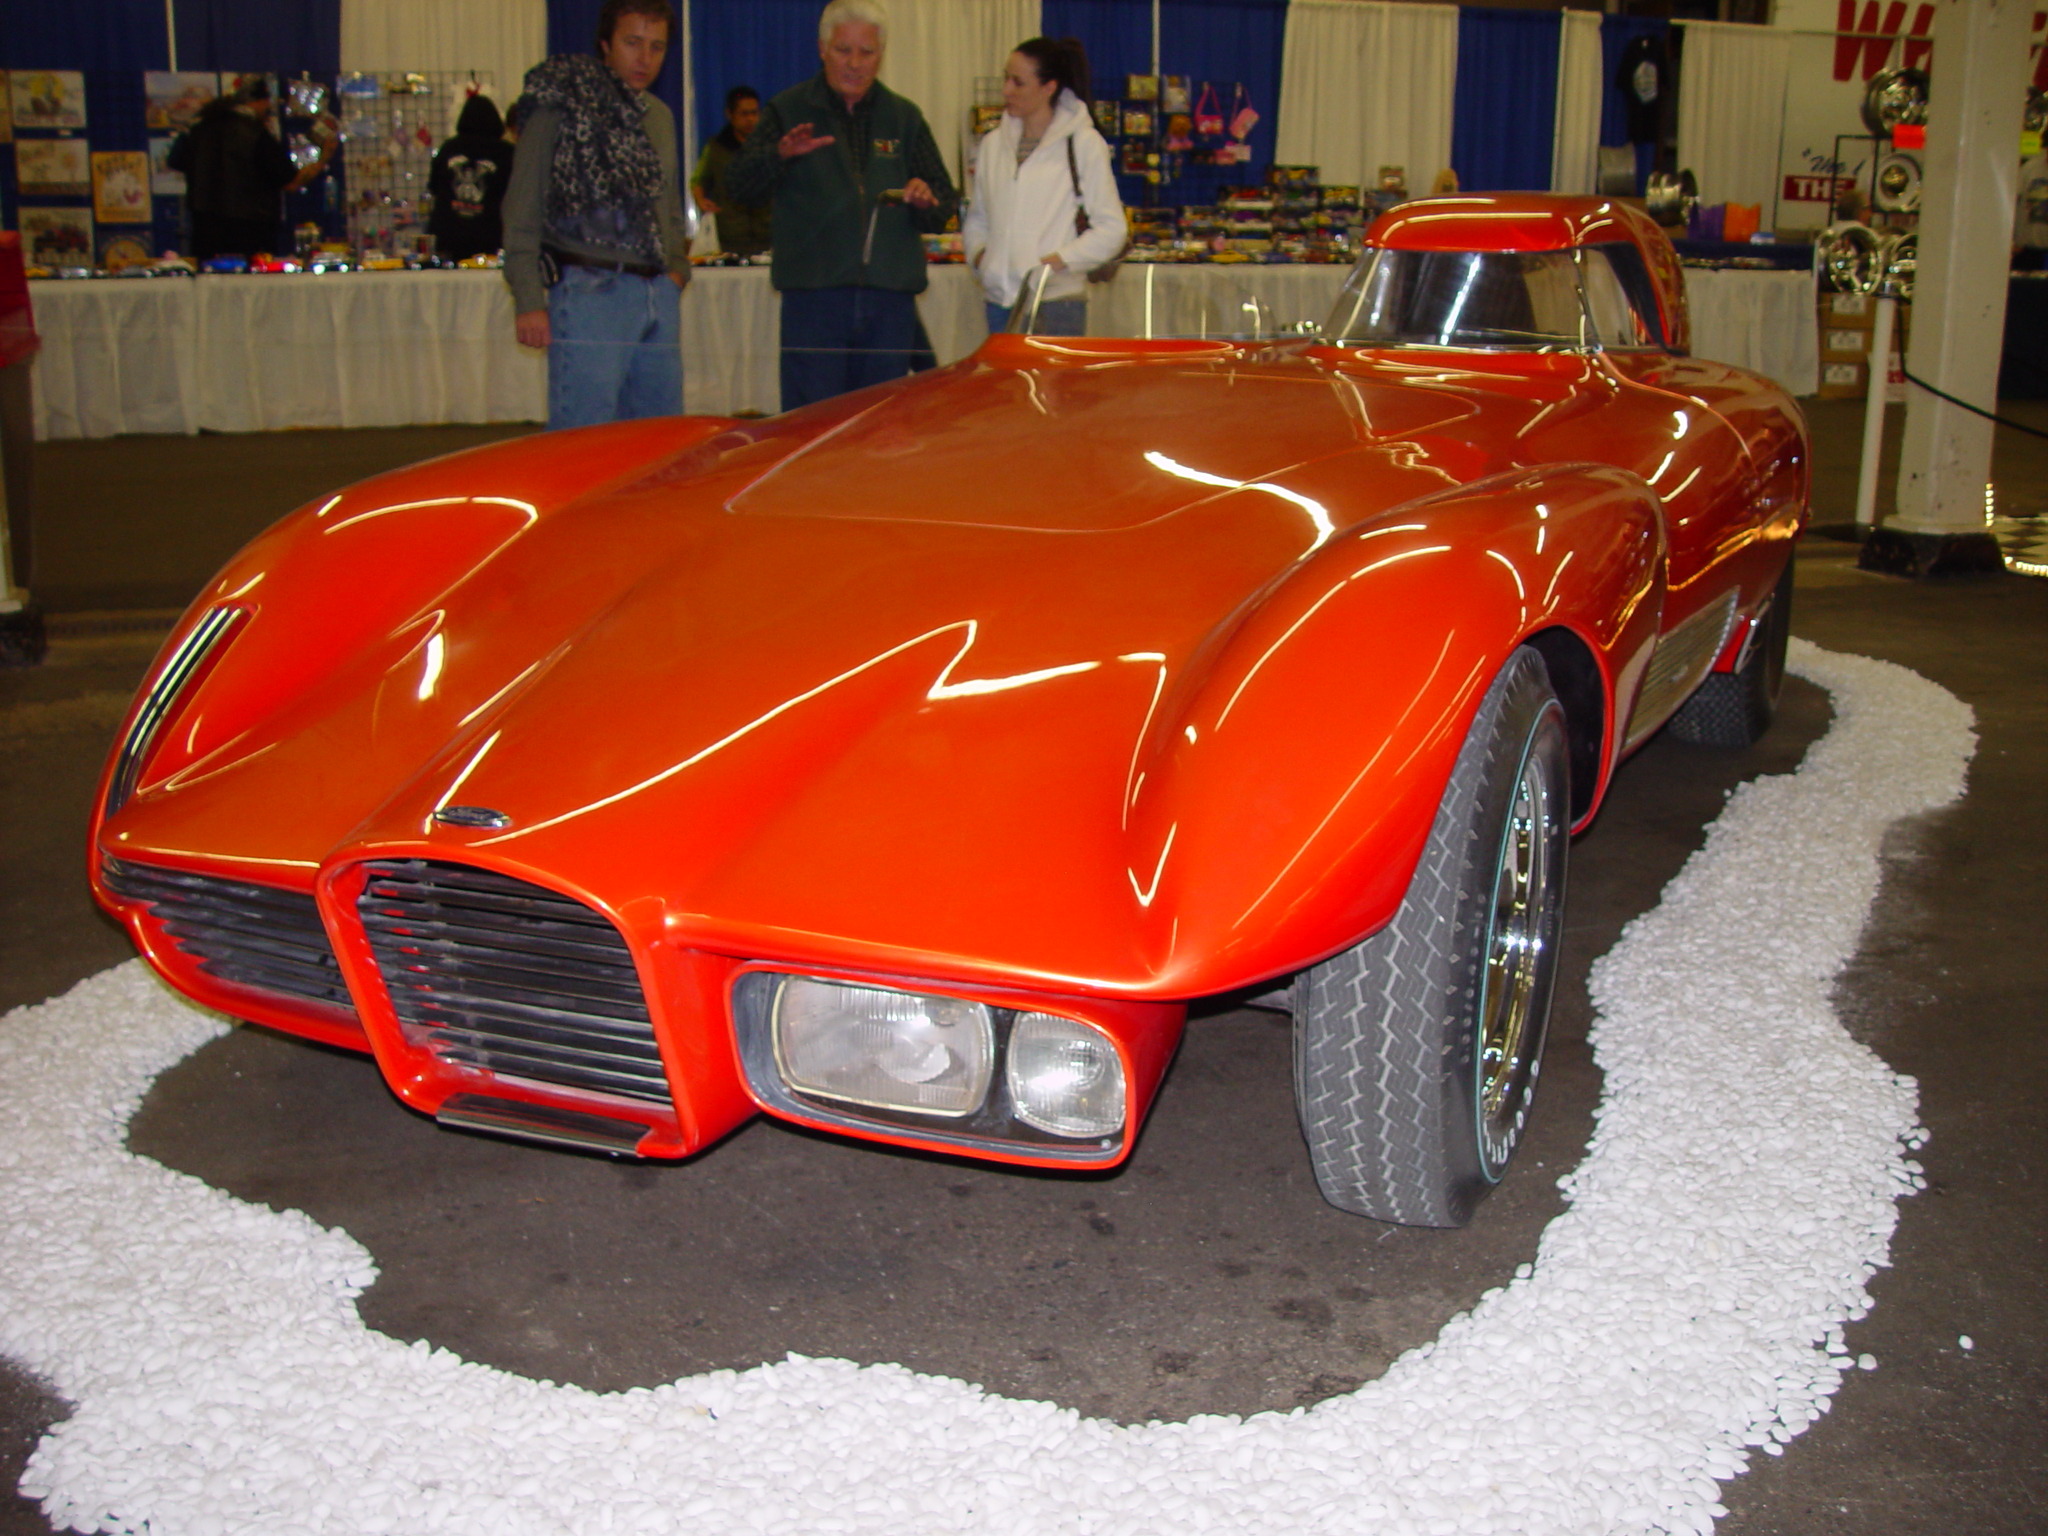 an old model orange sport car sits on display